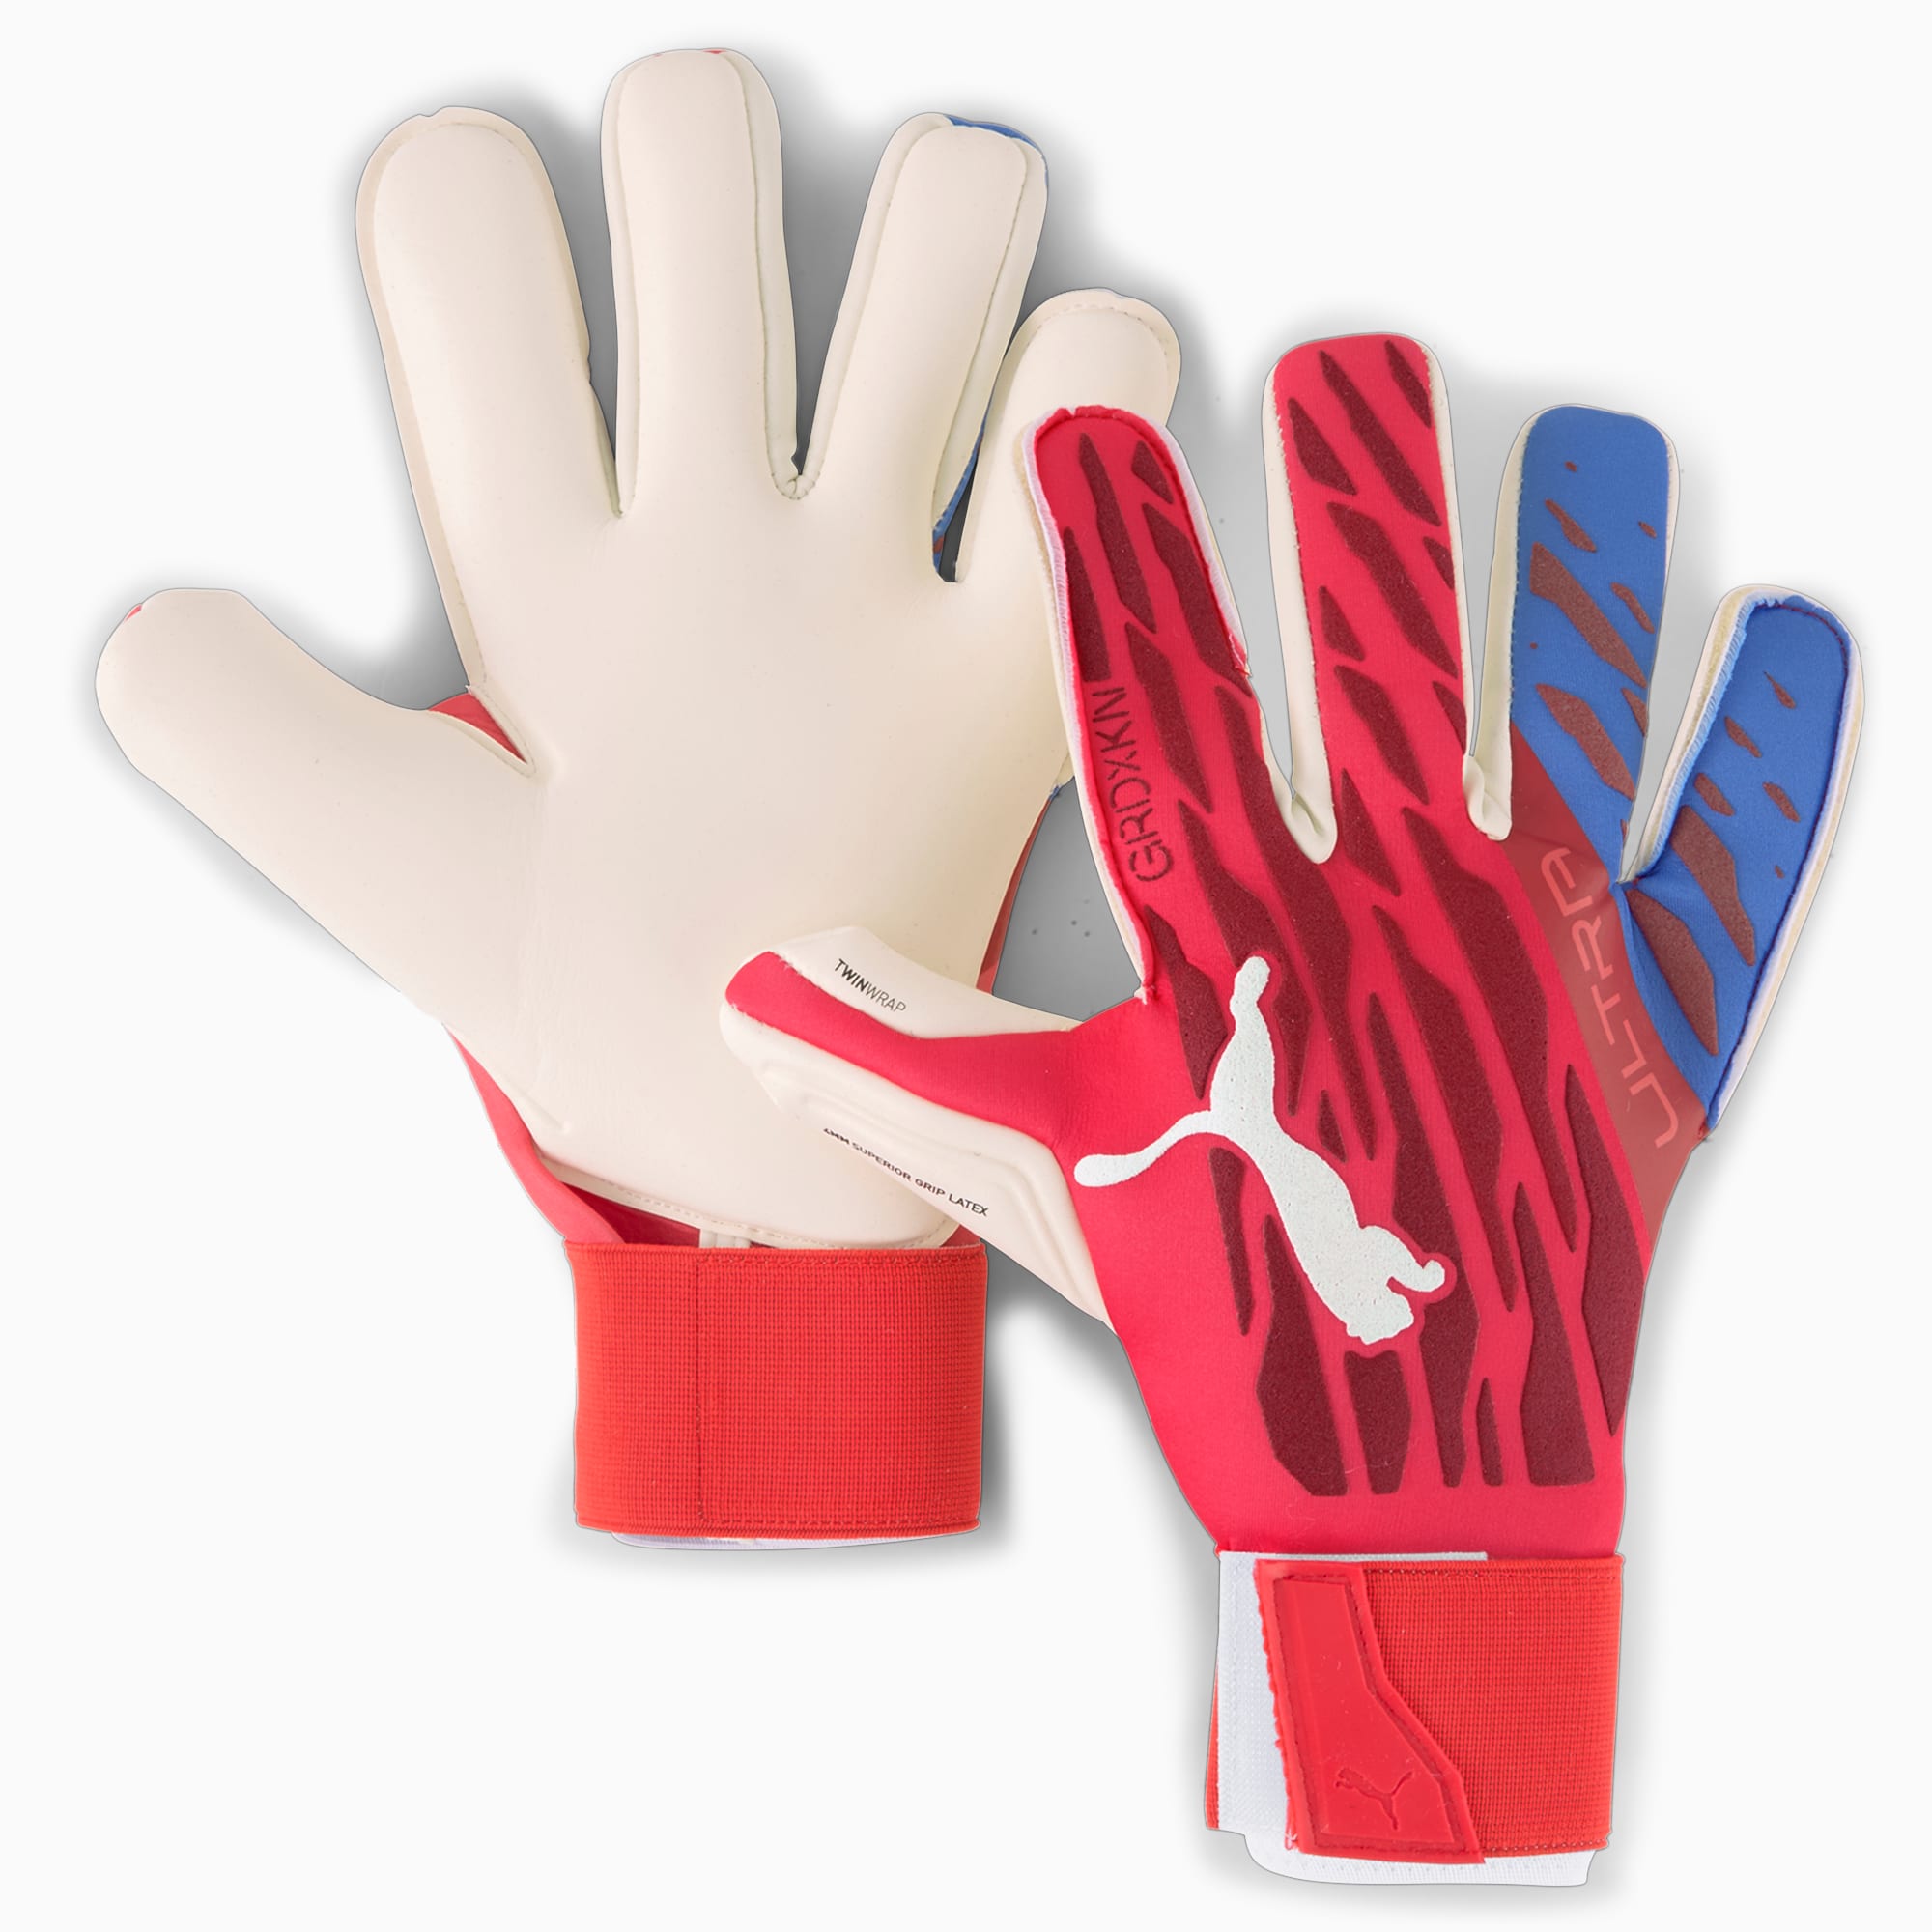 ULTRA Grip 1 Hybrid Pro Goalkeeper Gloves